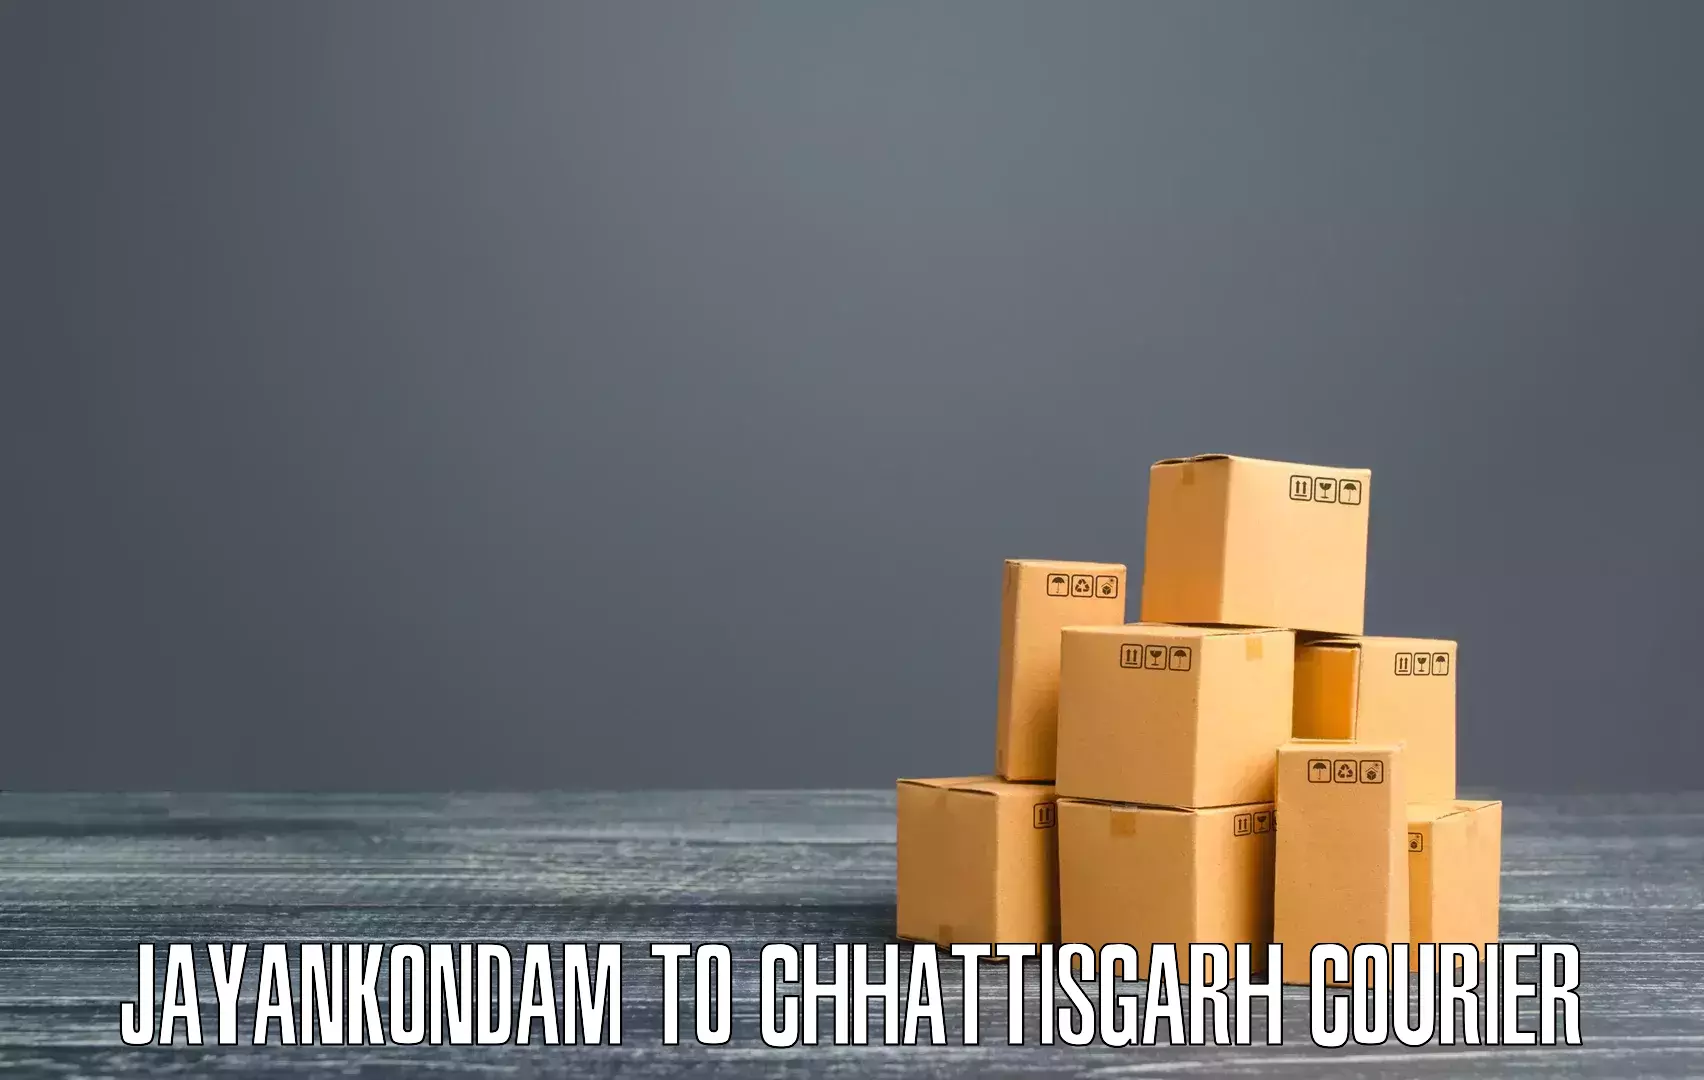 Efficient order fulfillment Jayankondam to Chhattisgarh